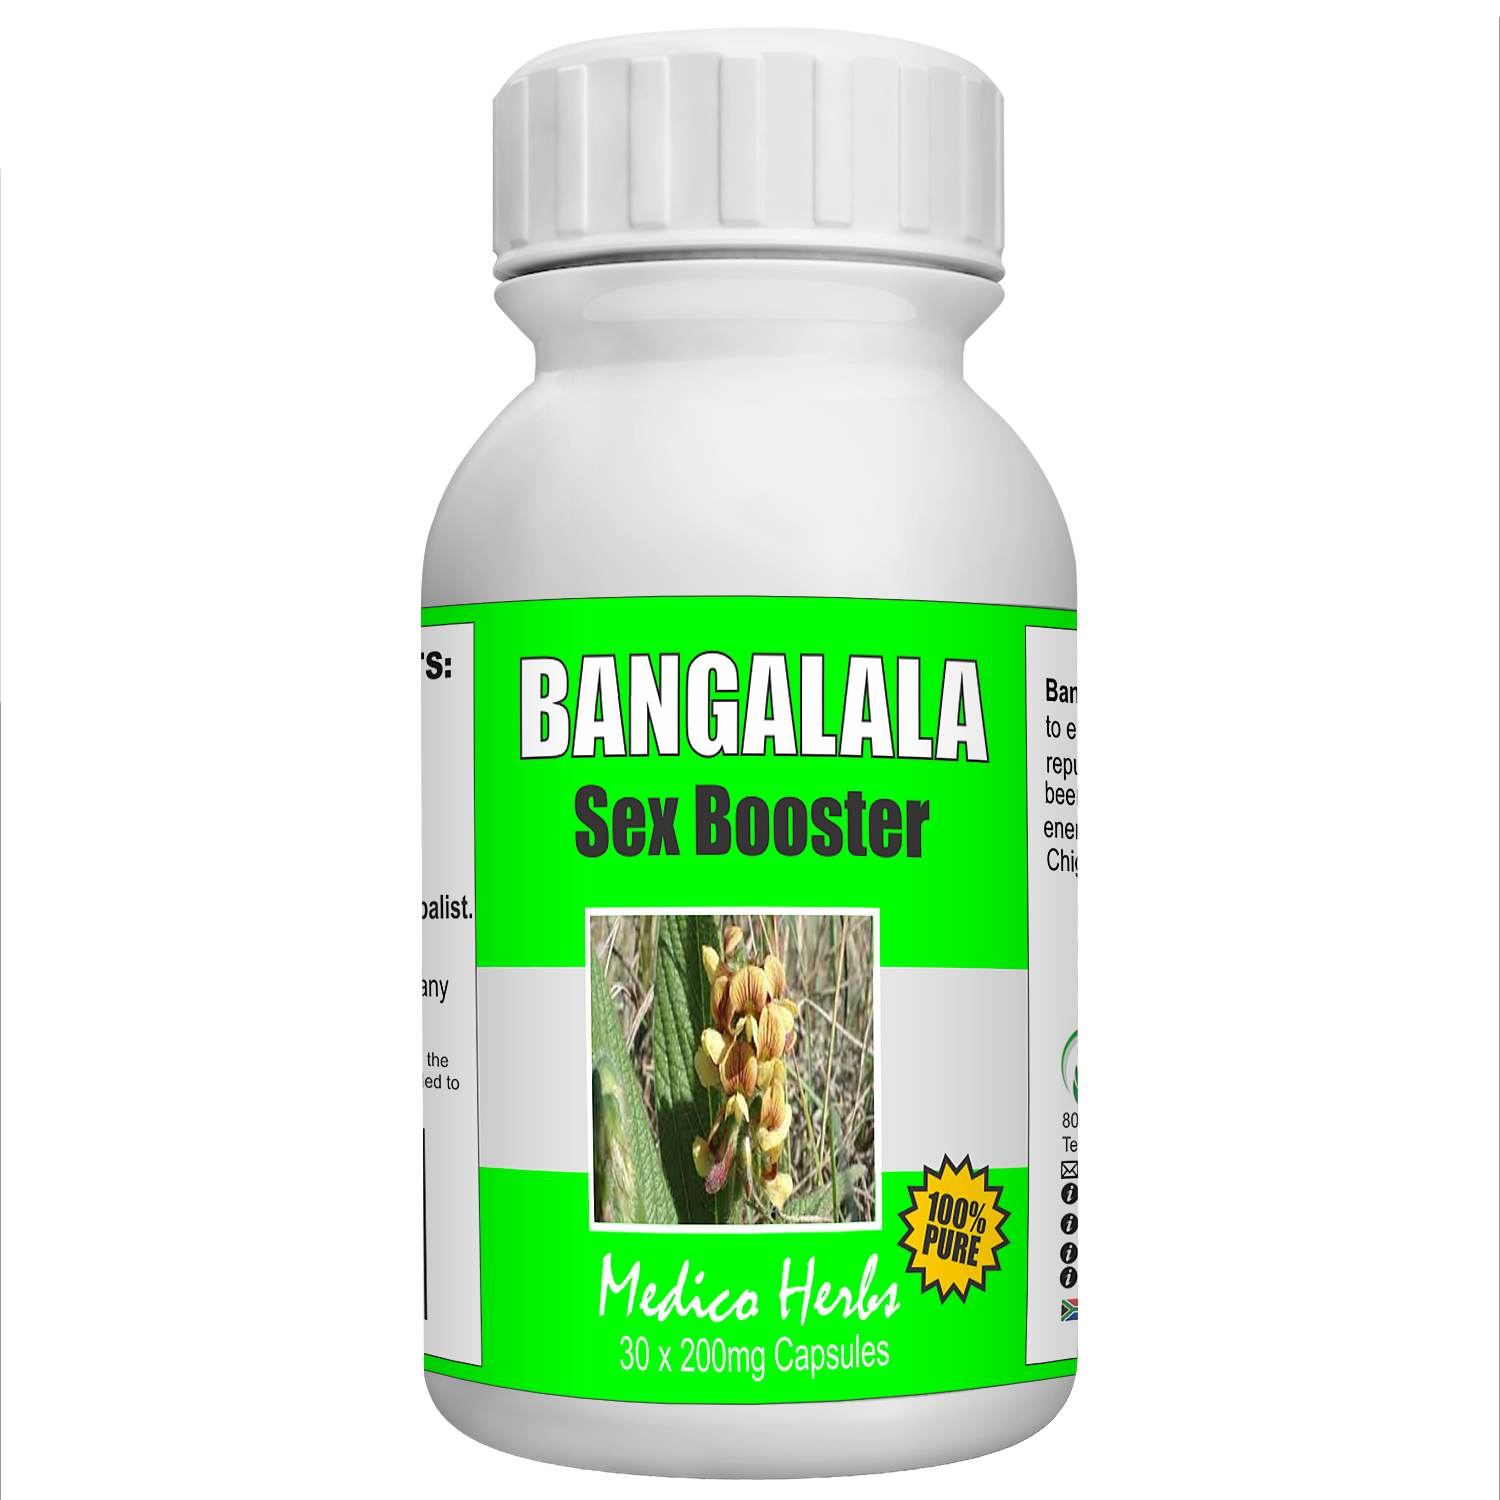 Bangalala Capsules or African Viagra - (3x 30) 90 Capsules - Buy 2x Bottles & get 3rd bottle FREE - CREASED LABELS